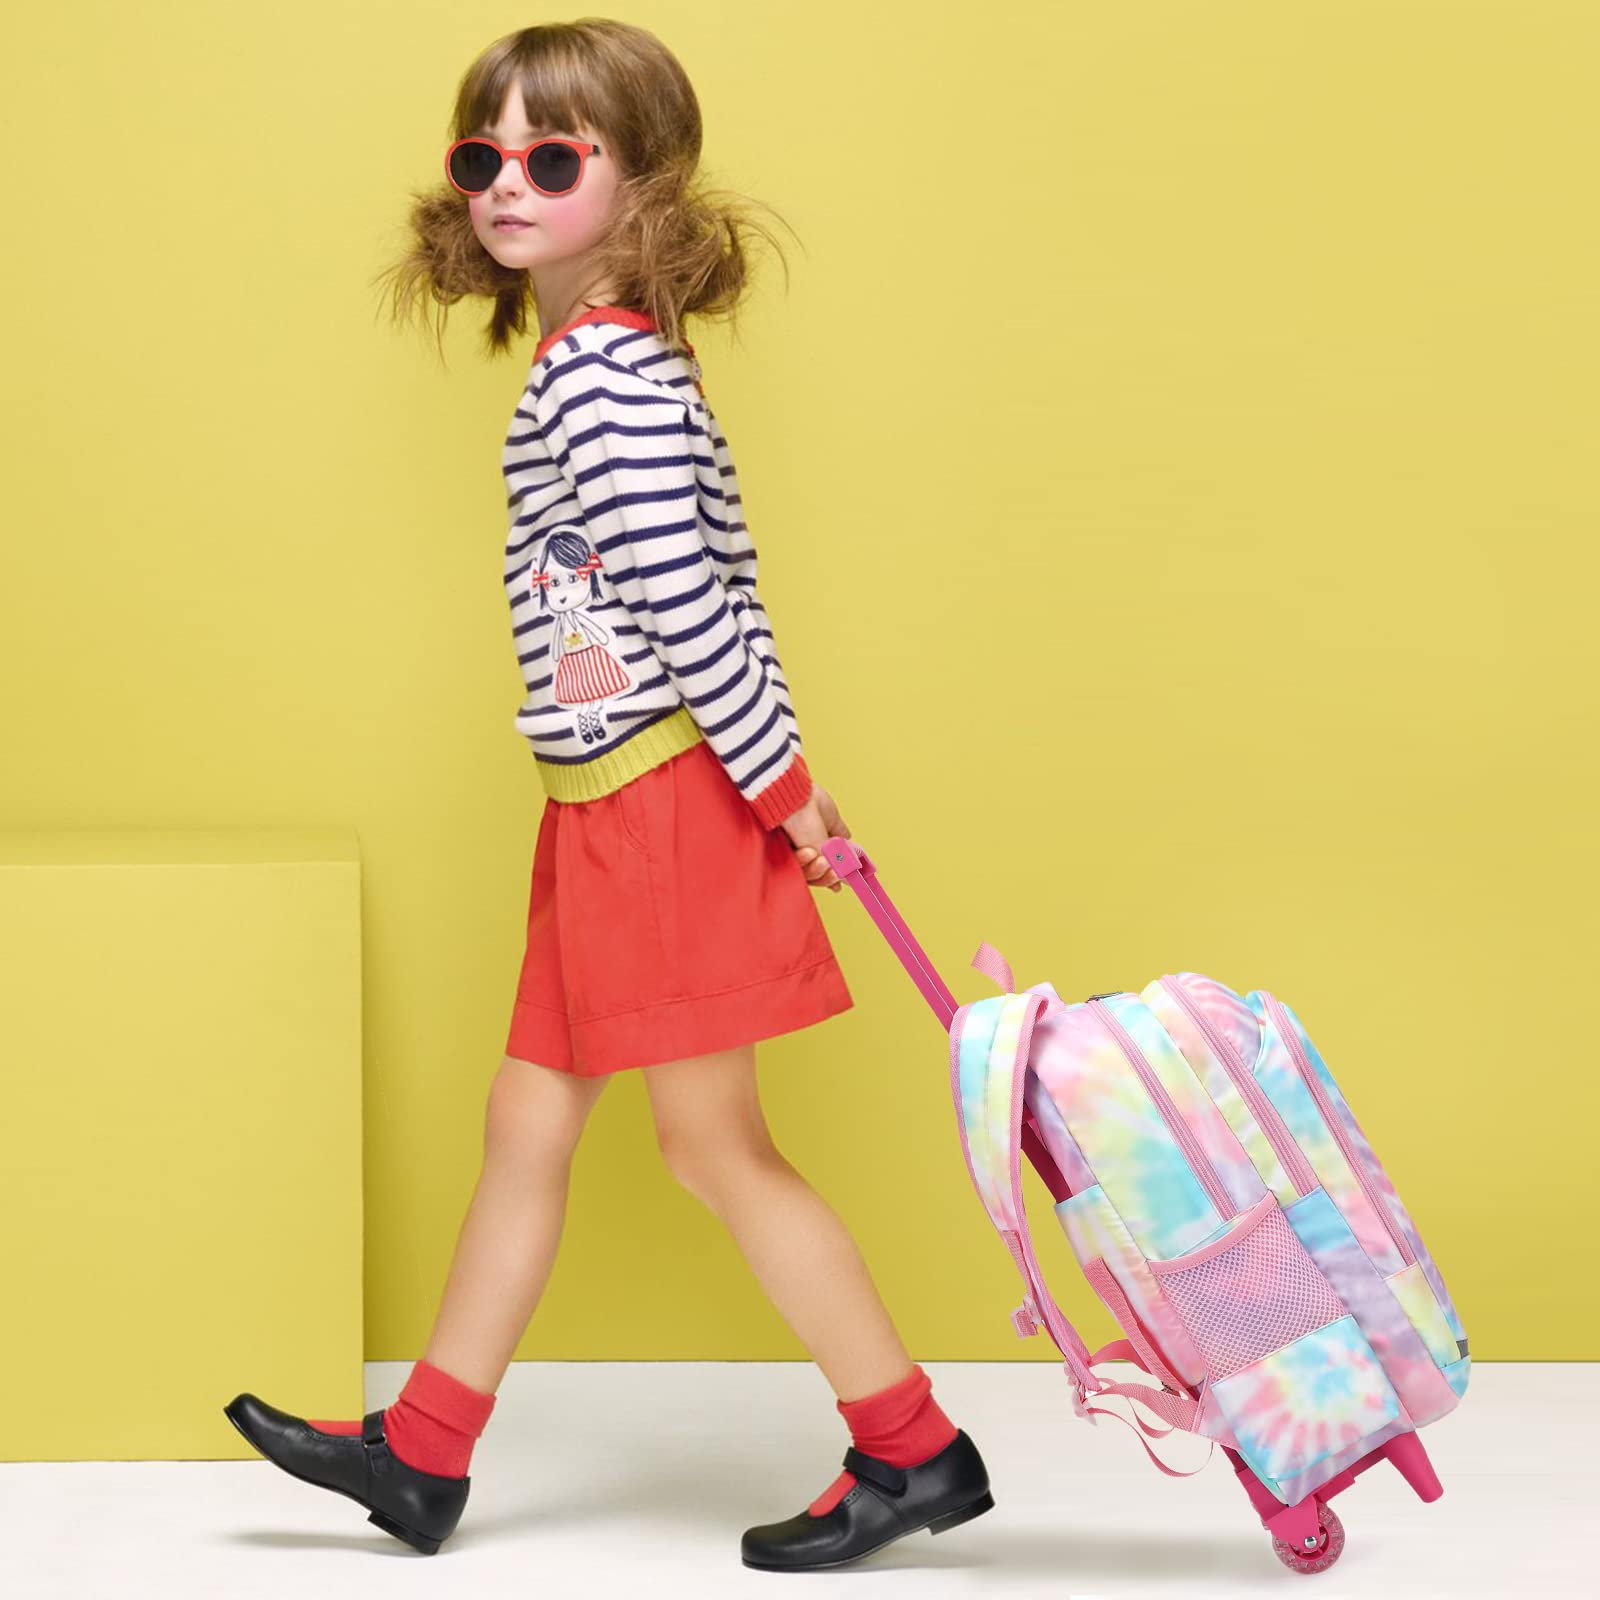 CAMTOP Rolling Backpack Girls Travel Roller Bag with Wheels Kids School Bags Wheeled Luggage Backpack